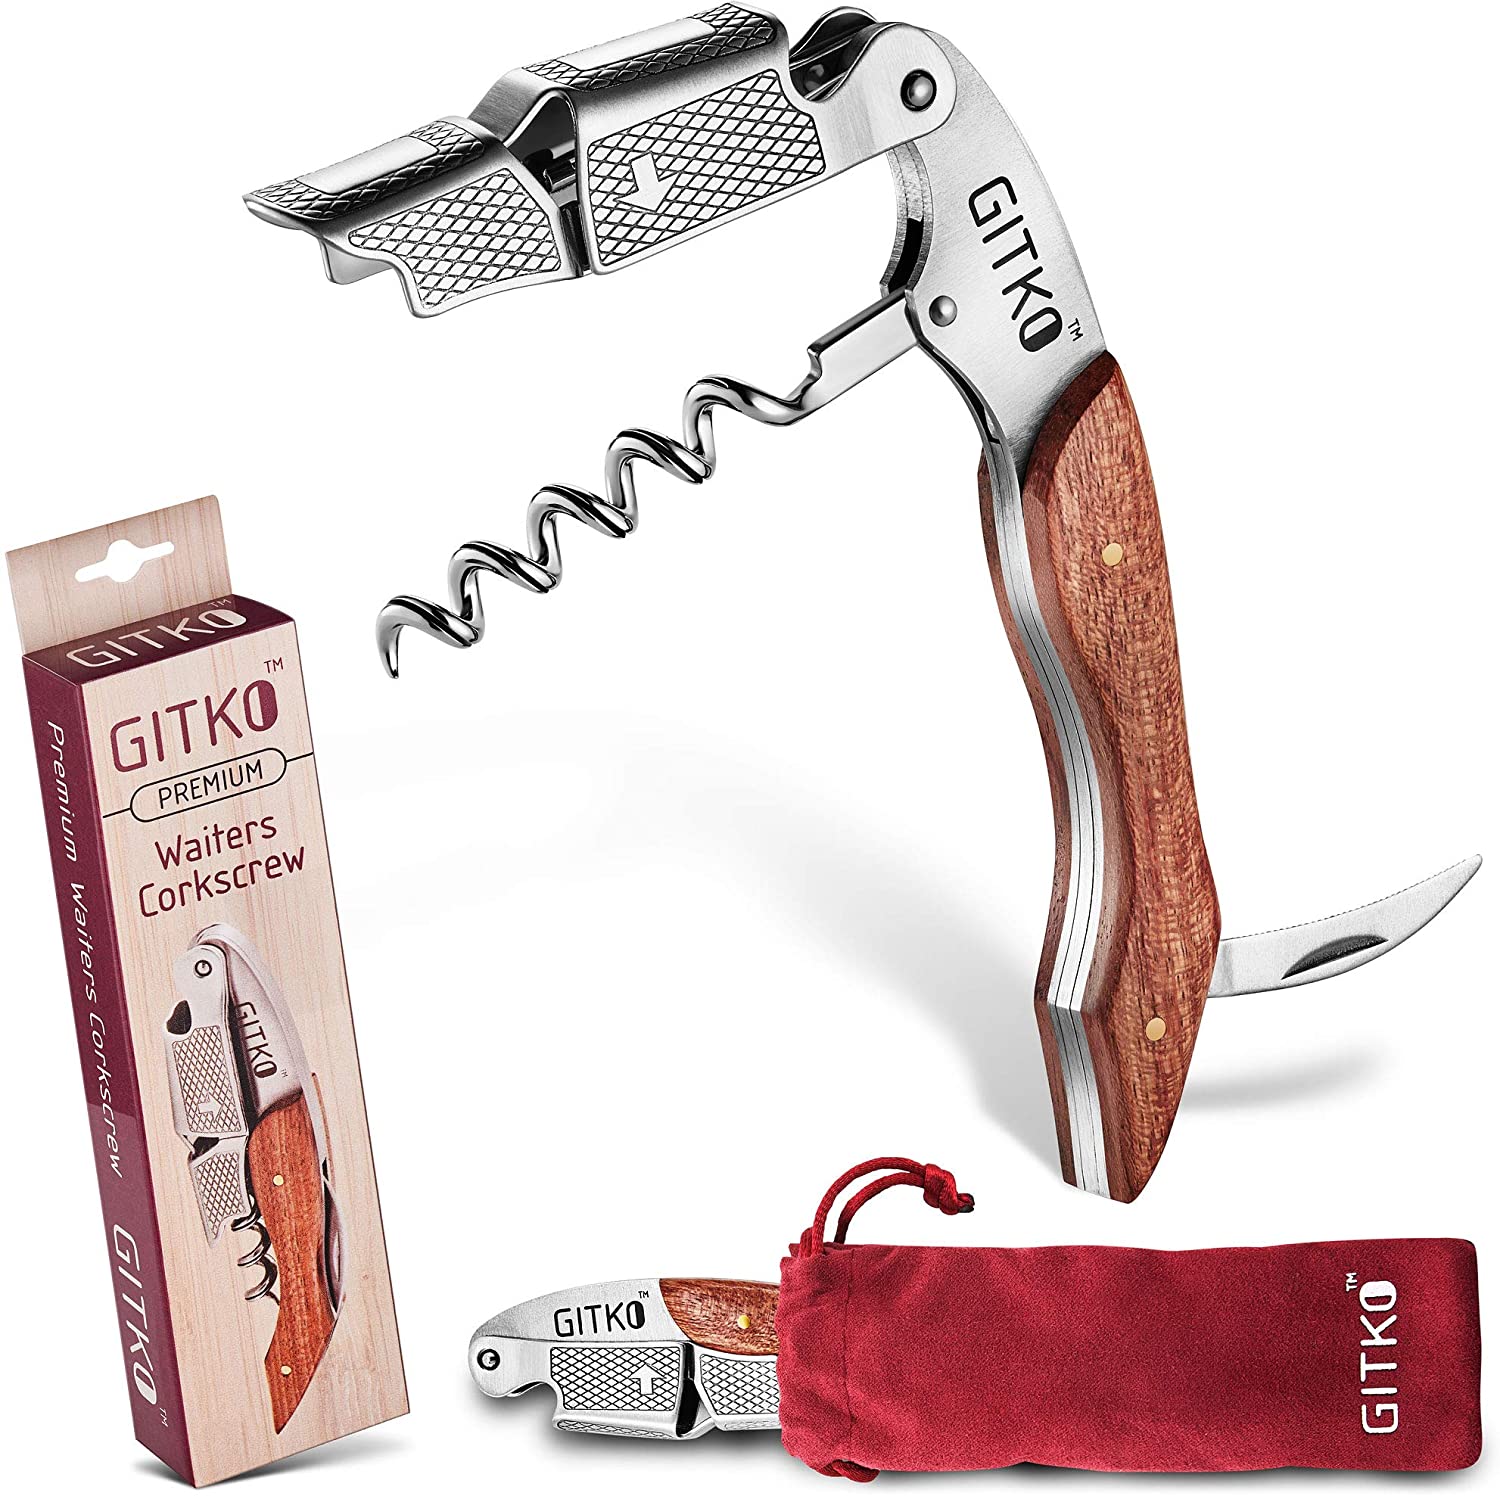 Gitko Wine Opener & Waiters Corkscrew